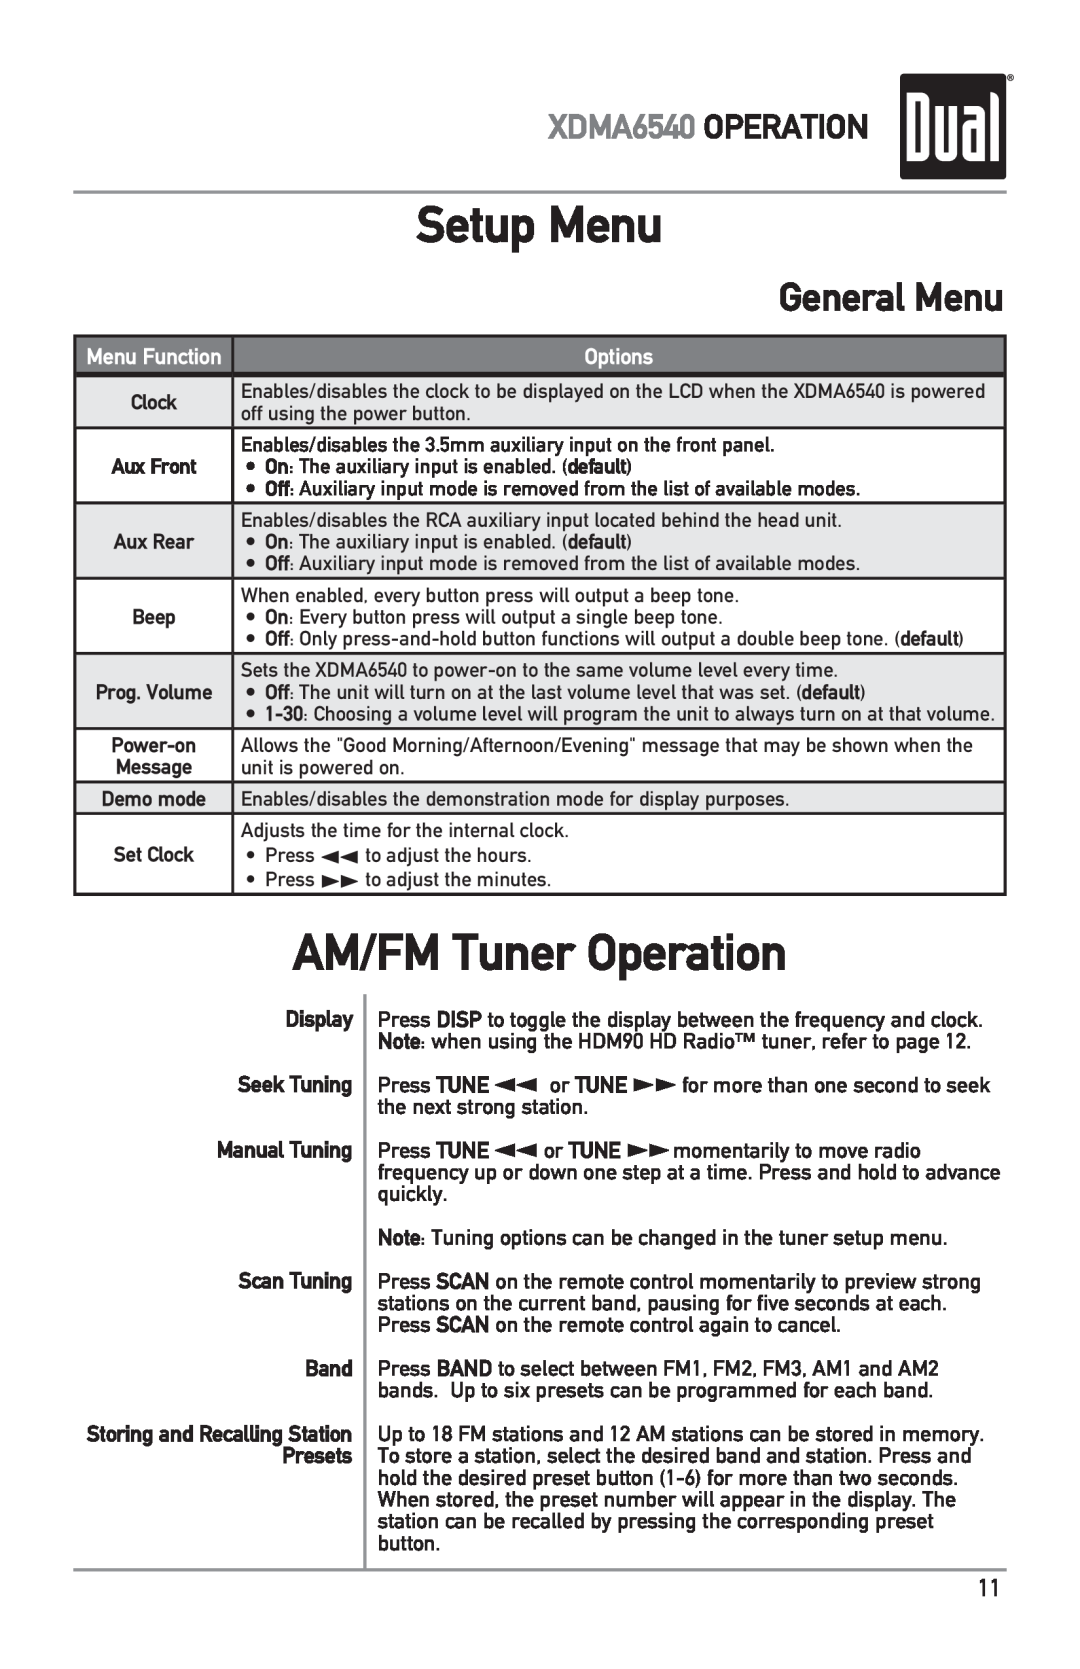 Dual owner manual AM/FM Tuner Operation, General Menu, Setup Menu, XDMA6540 OPERATION, Options 